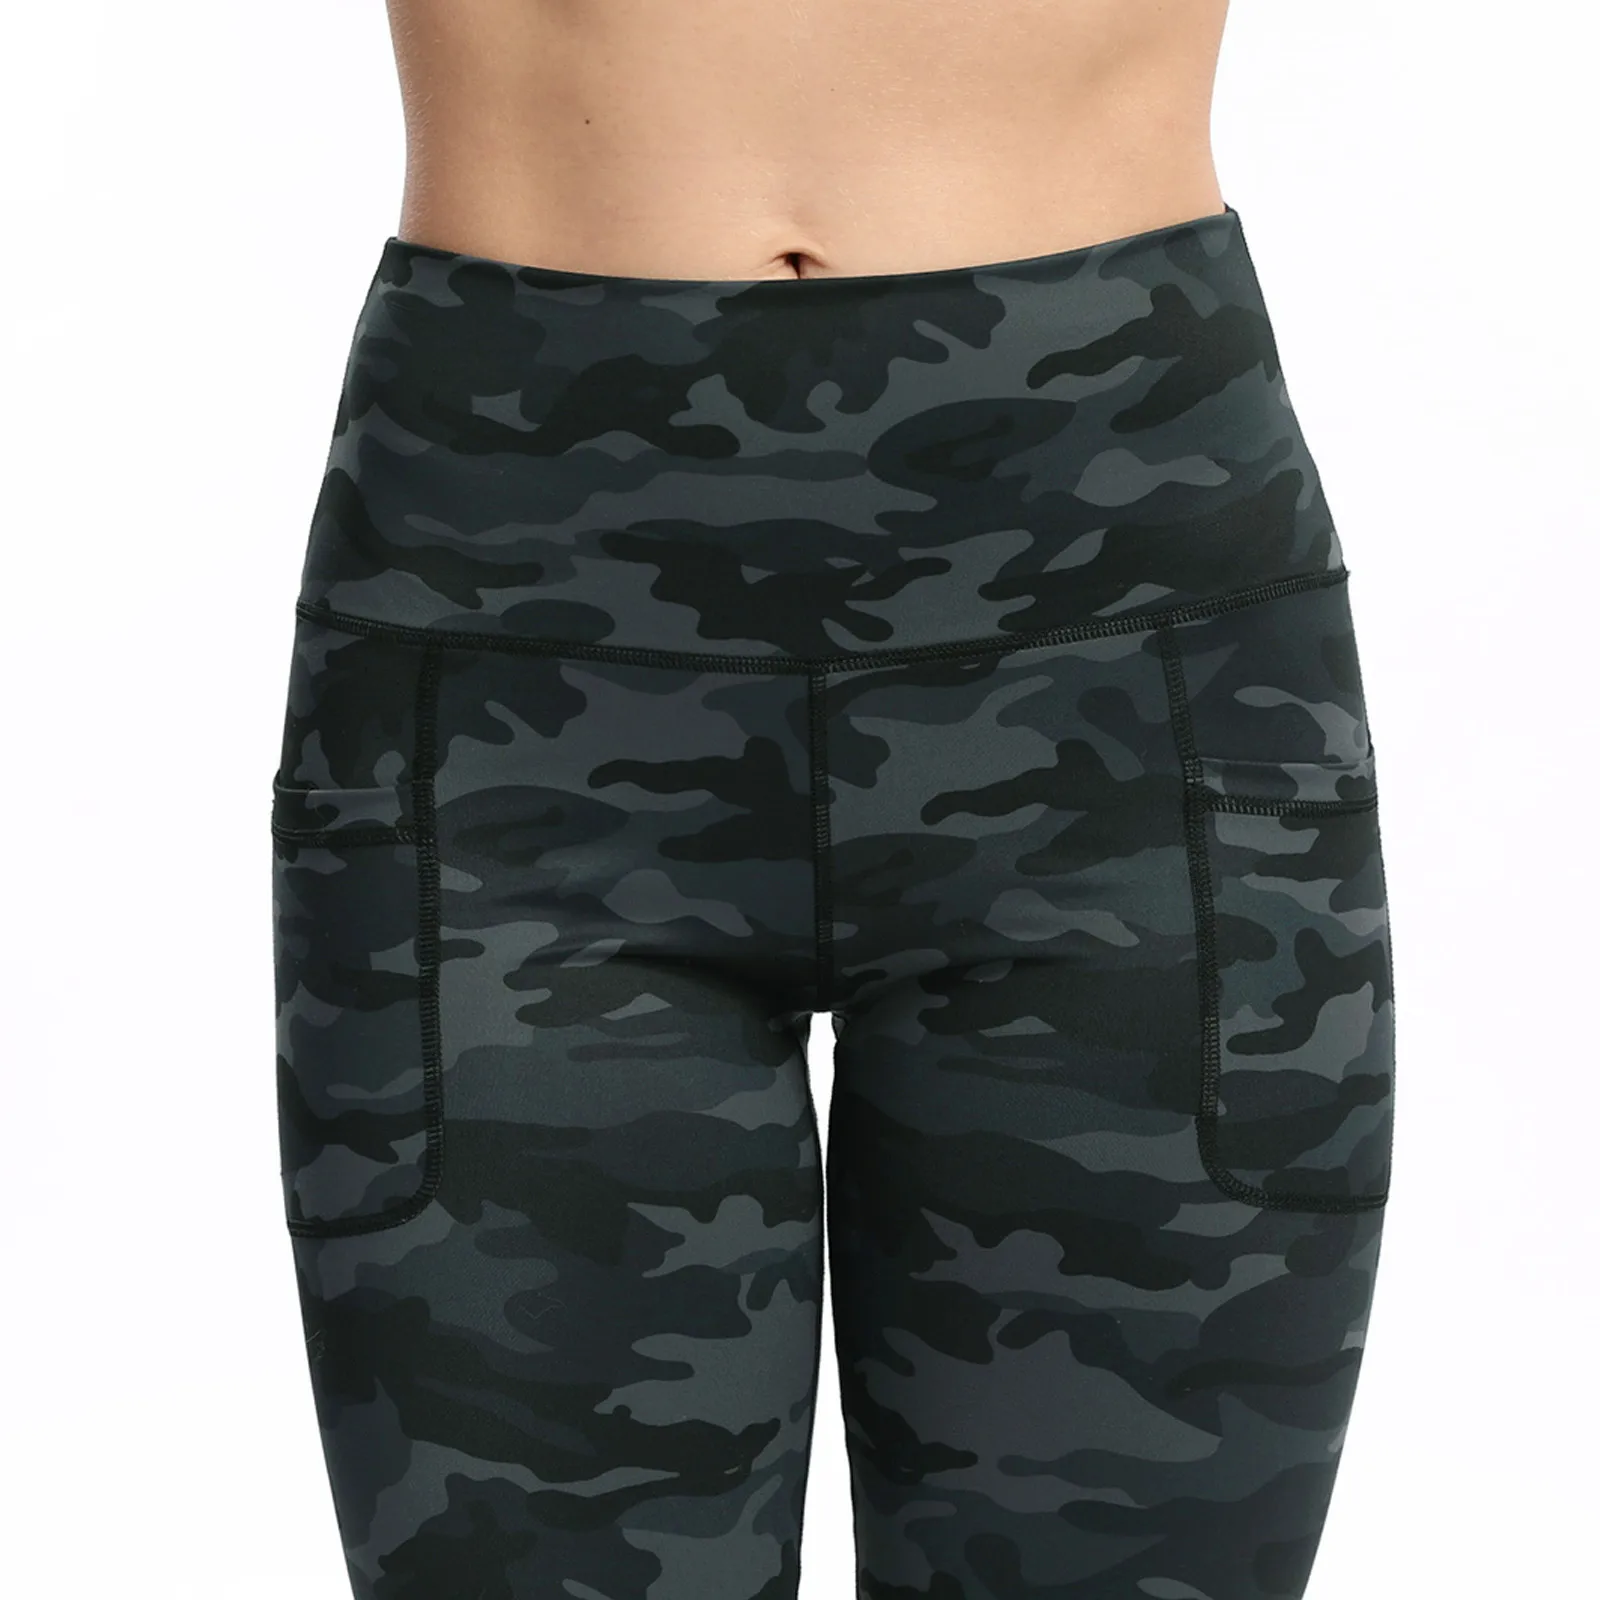 high waisted leggings Women Camouflage Leggings Fitness Military Army Green Pants With Pockets Workout Sporter Skinny High Waist Elastic Leggings tiktok leggings